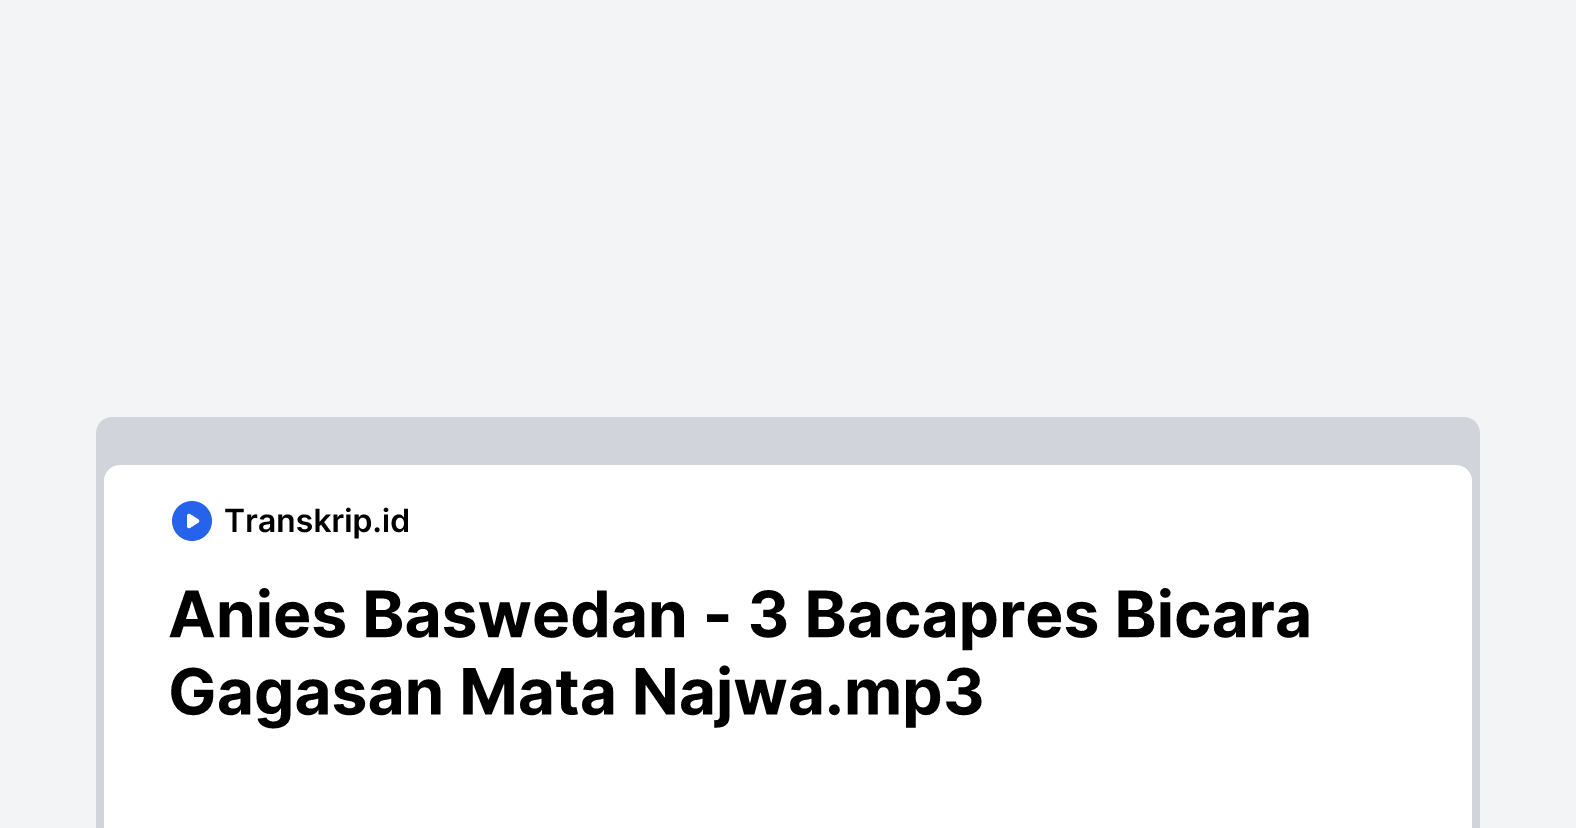 Anies Baswedan - 3 Bacapres Bicara Gagasan Mata Najwa.mp3